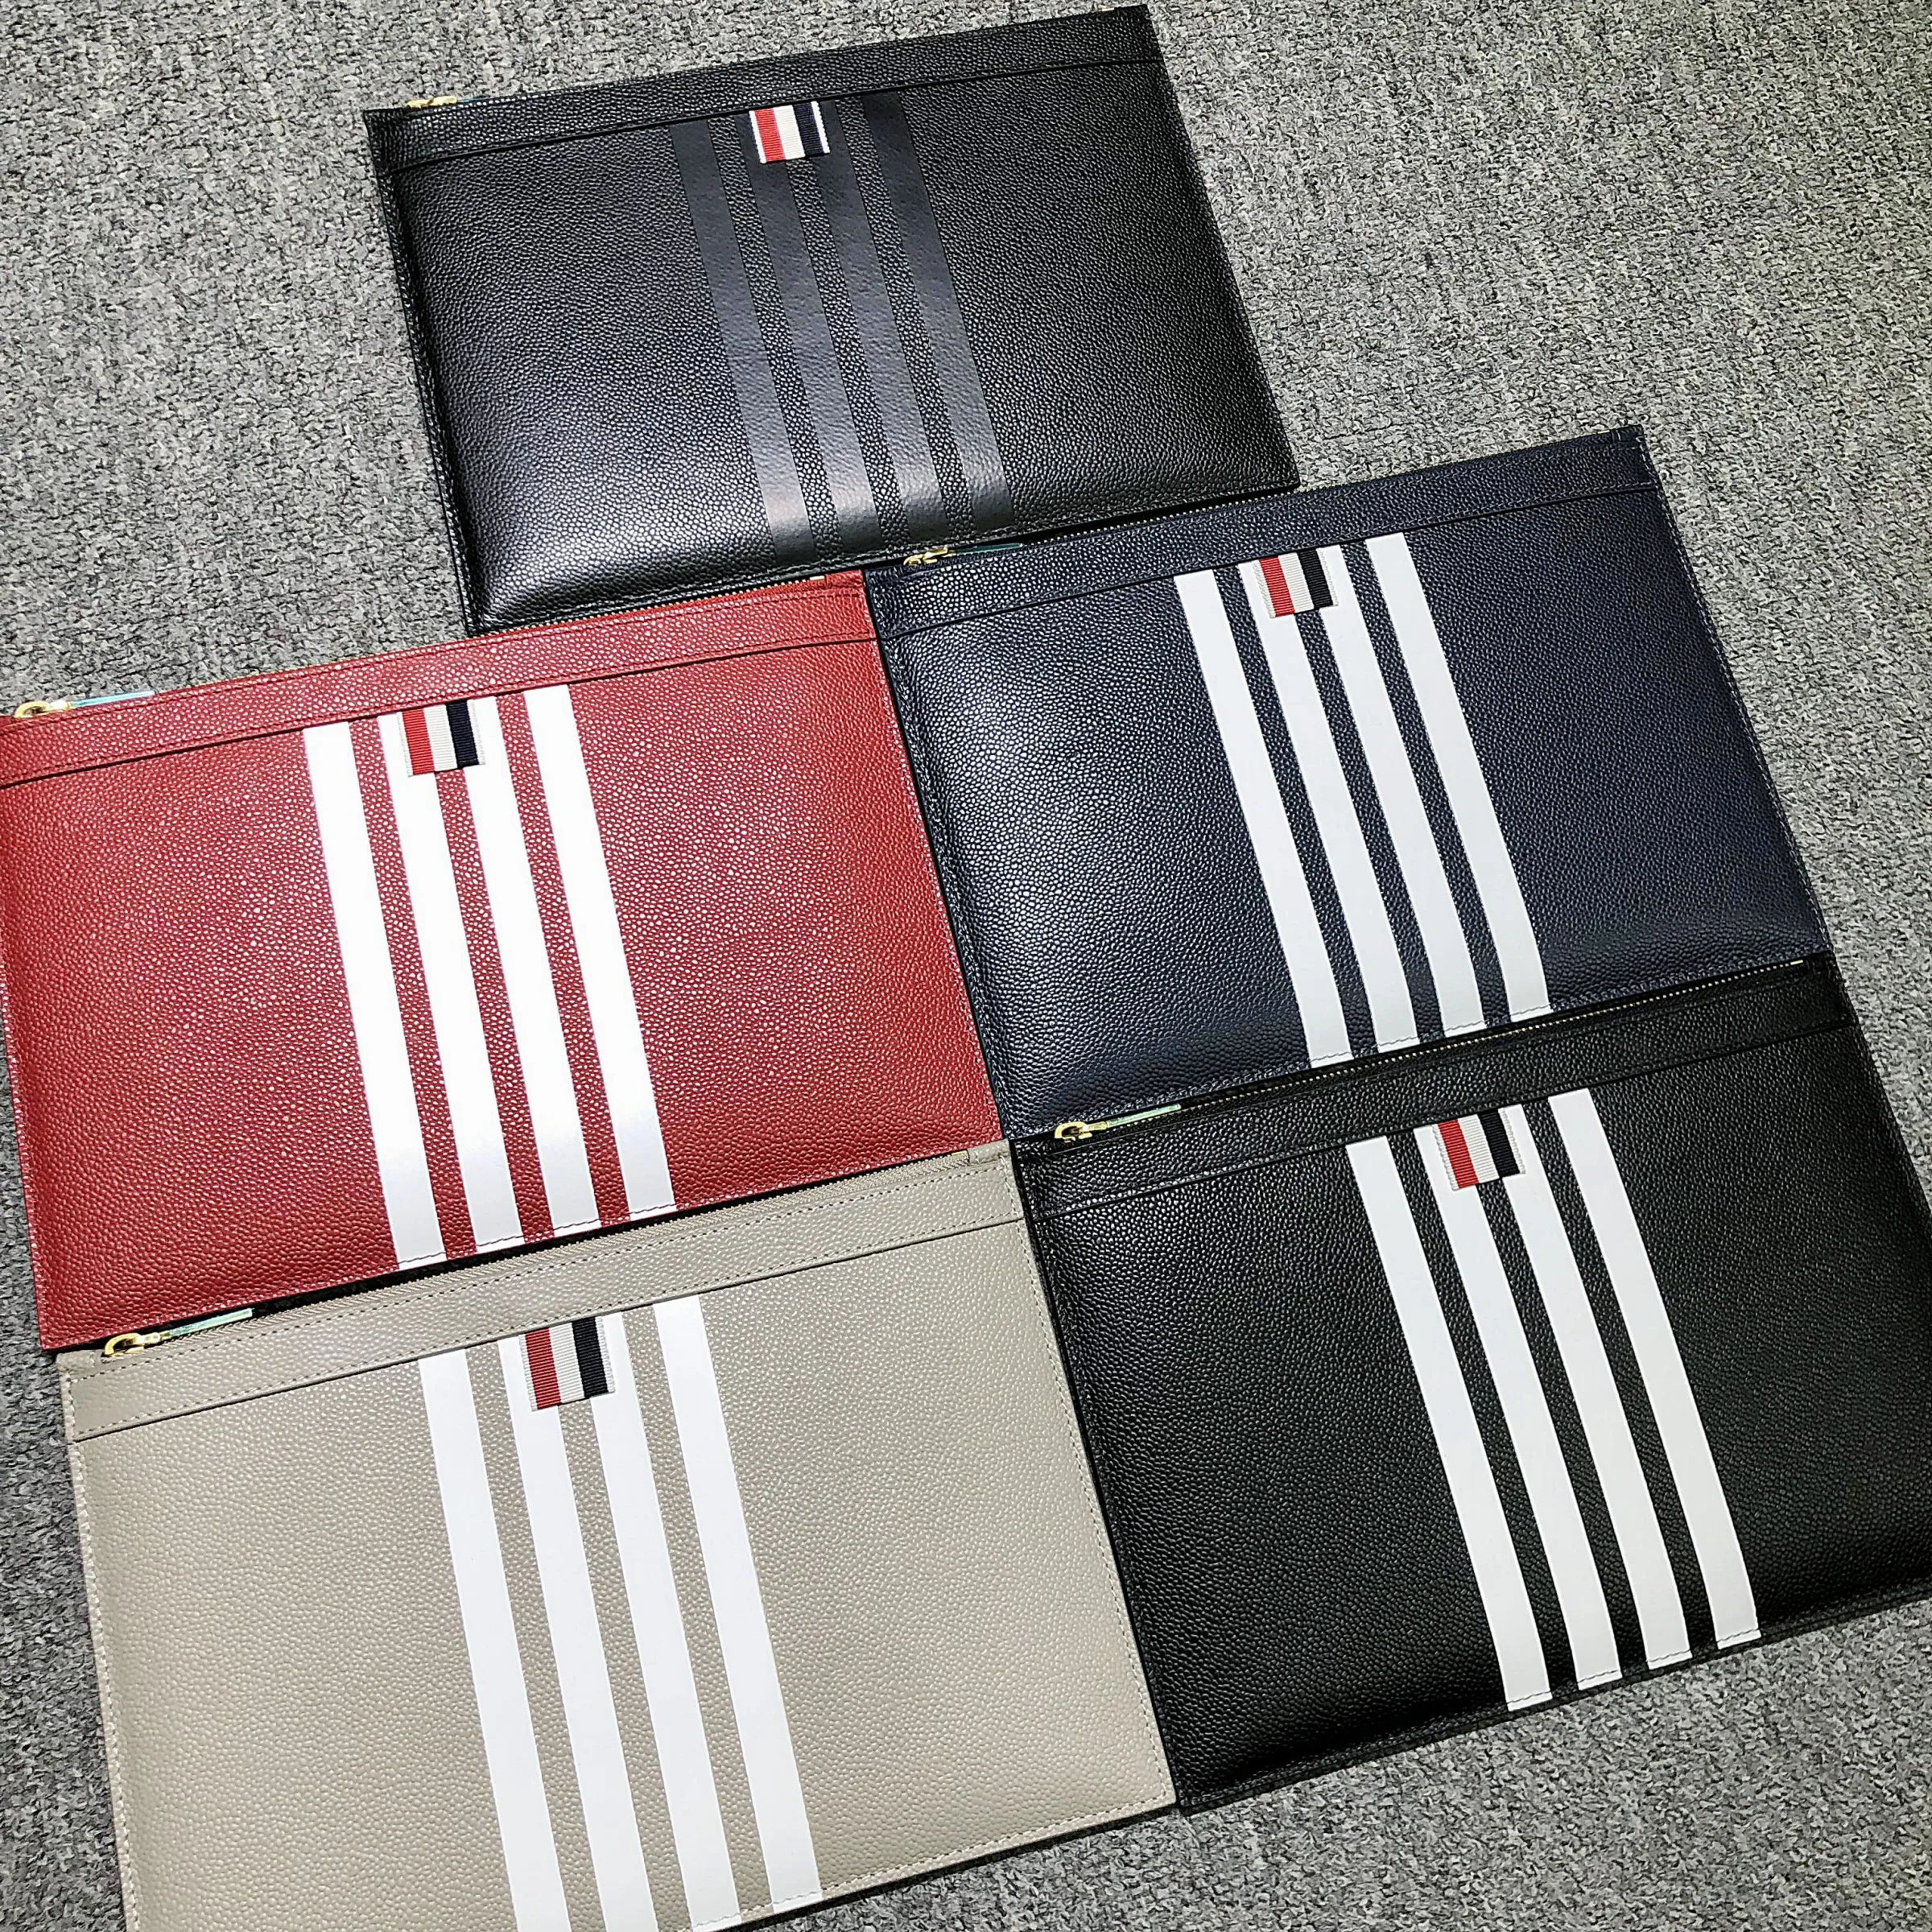 TB THOM Men's Clutch Bag Fashion Design Classic White Striped Business Bag Genuine Leather High Quality Messenger Clutch Bag